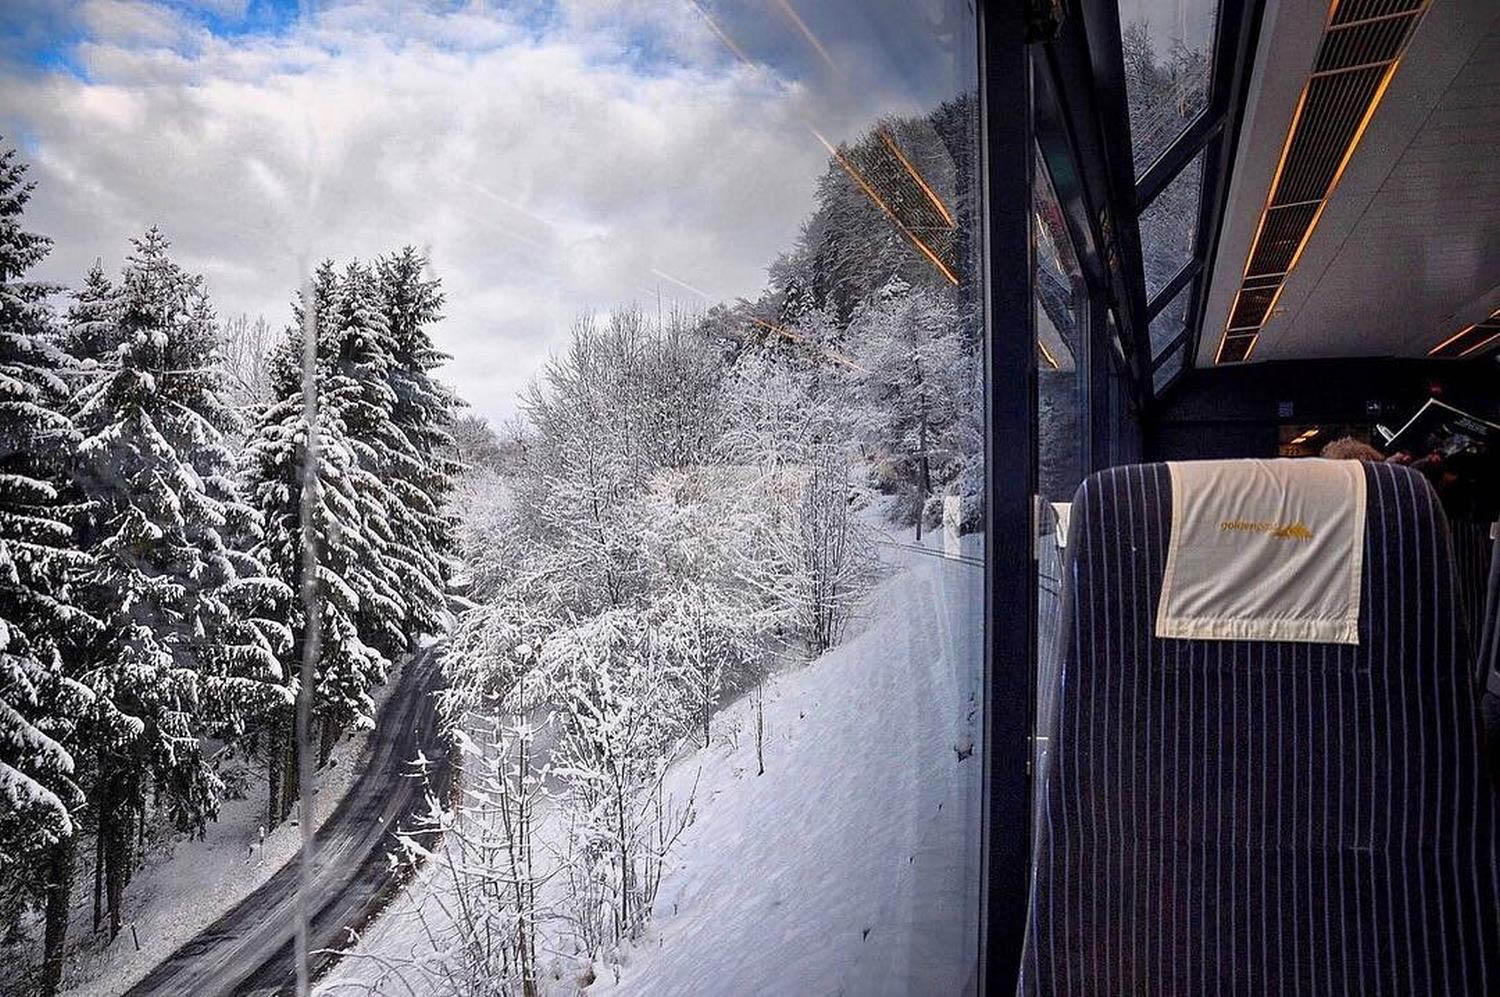 Château-d'Oex风景列车瑞士可持续旅游